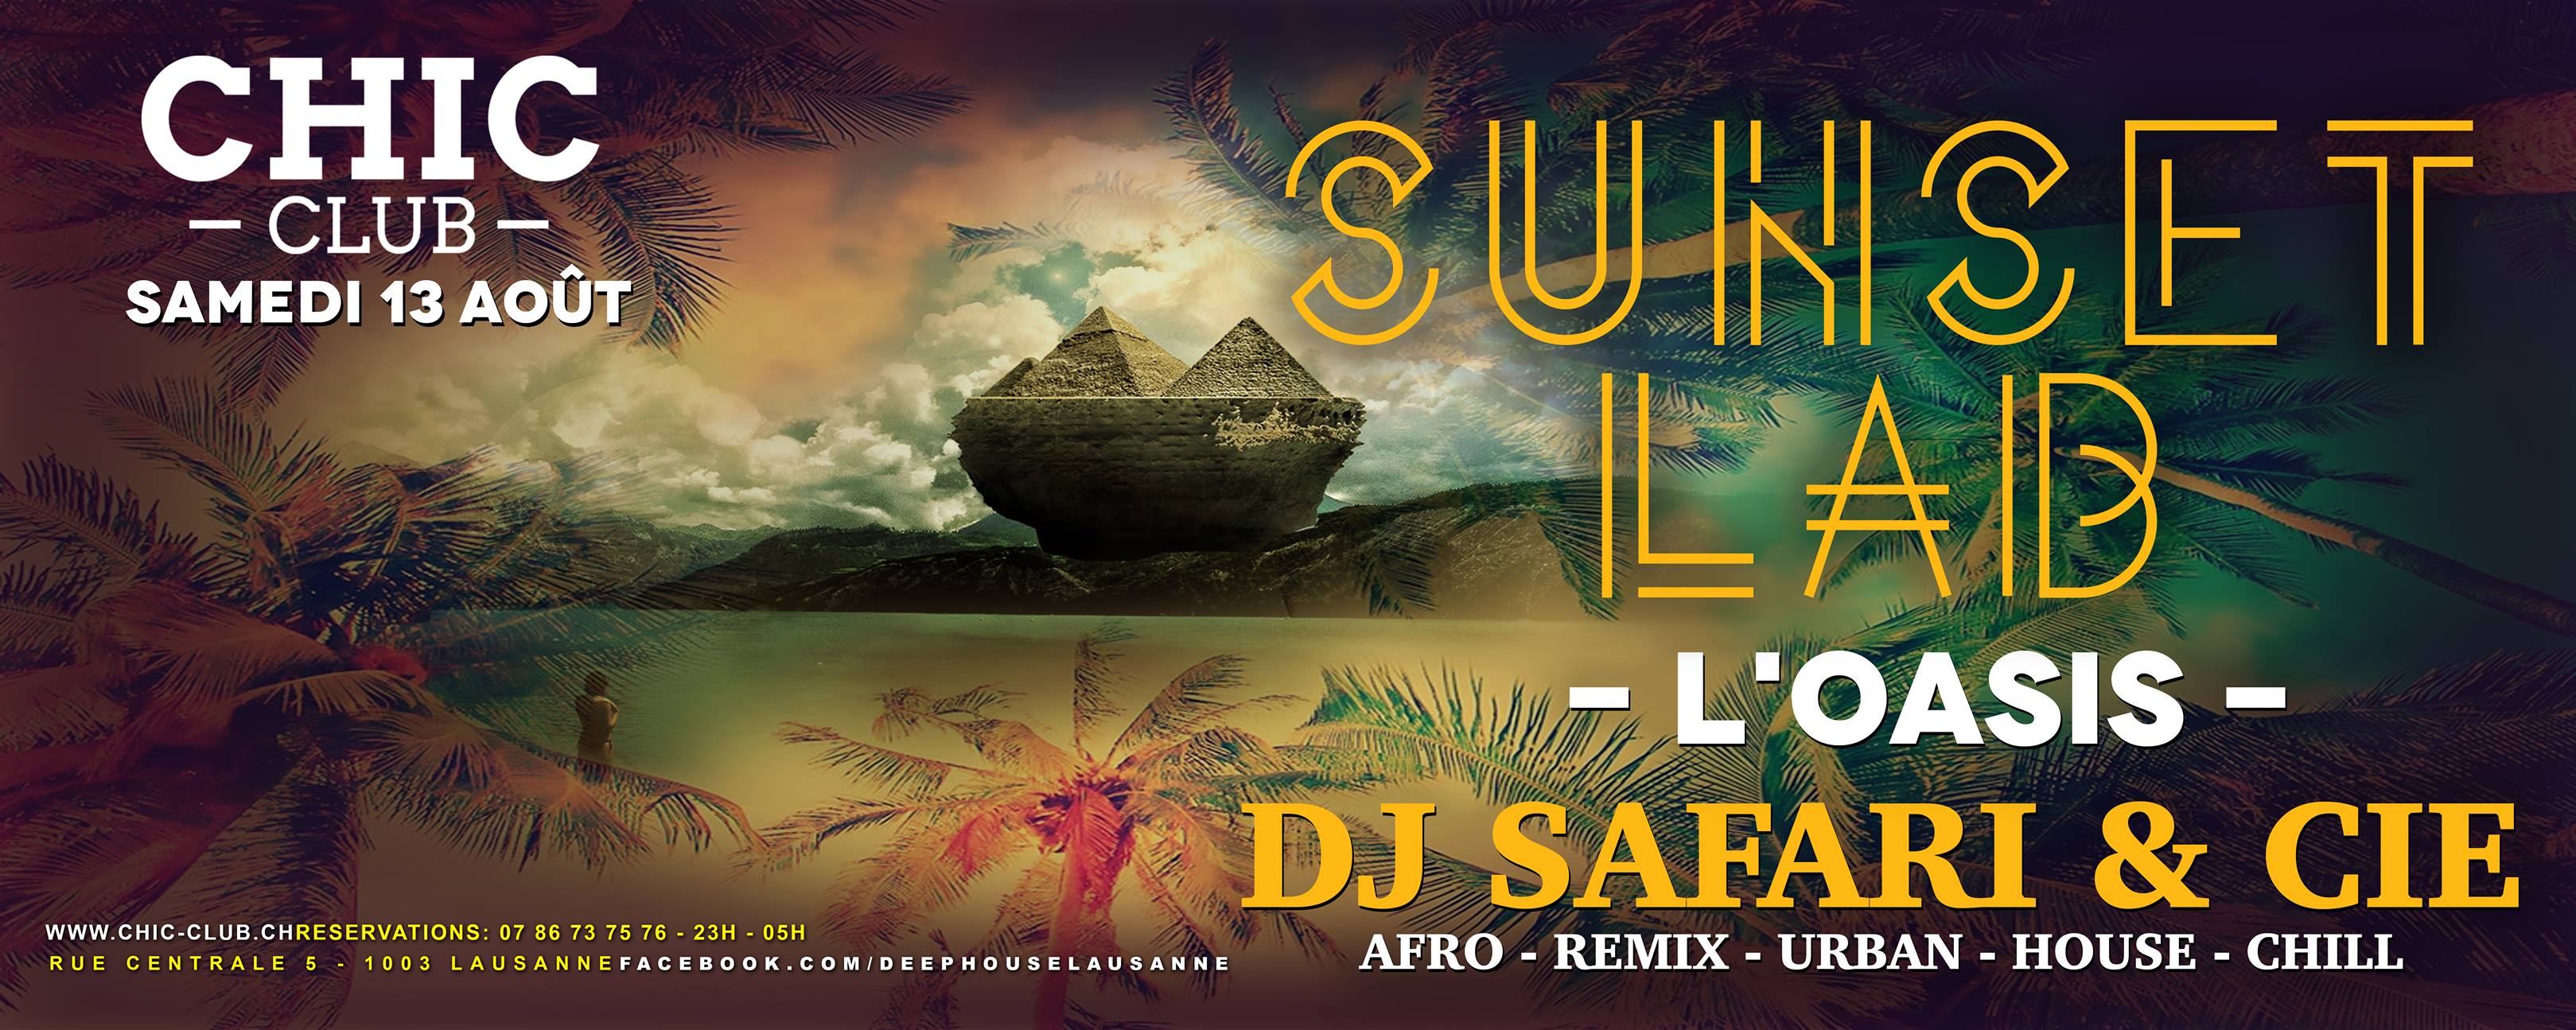 SunsetLab Lausanne Dizi Events Safari647